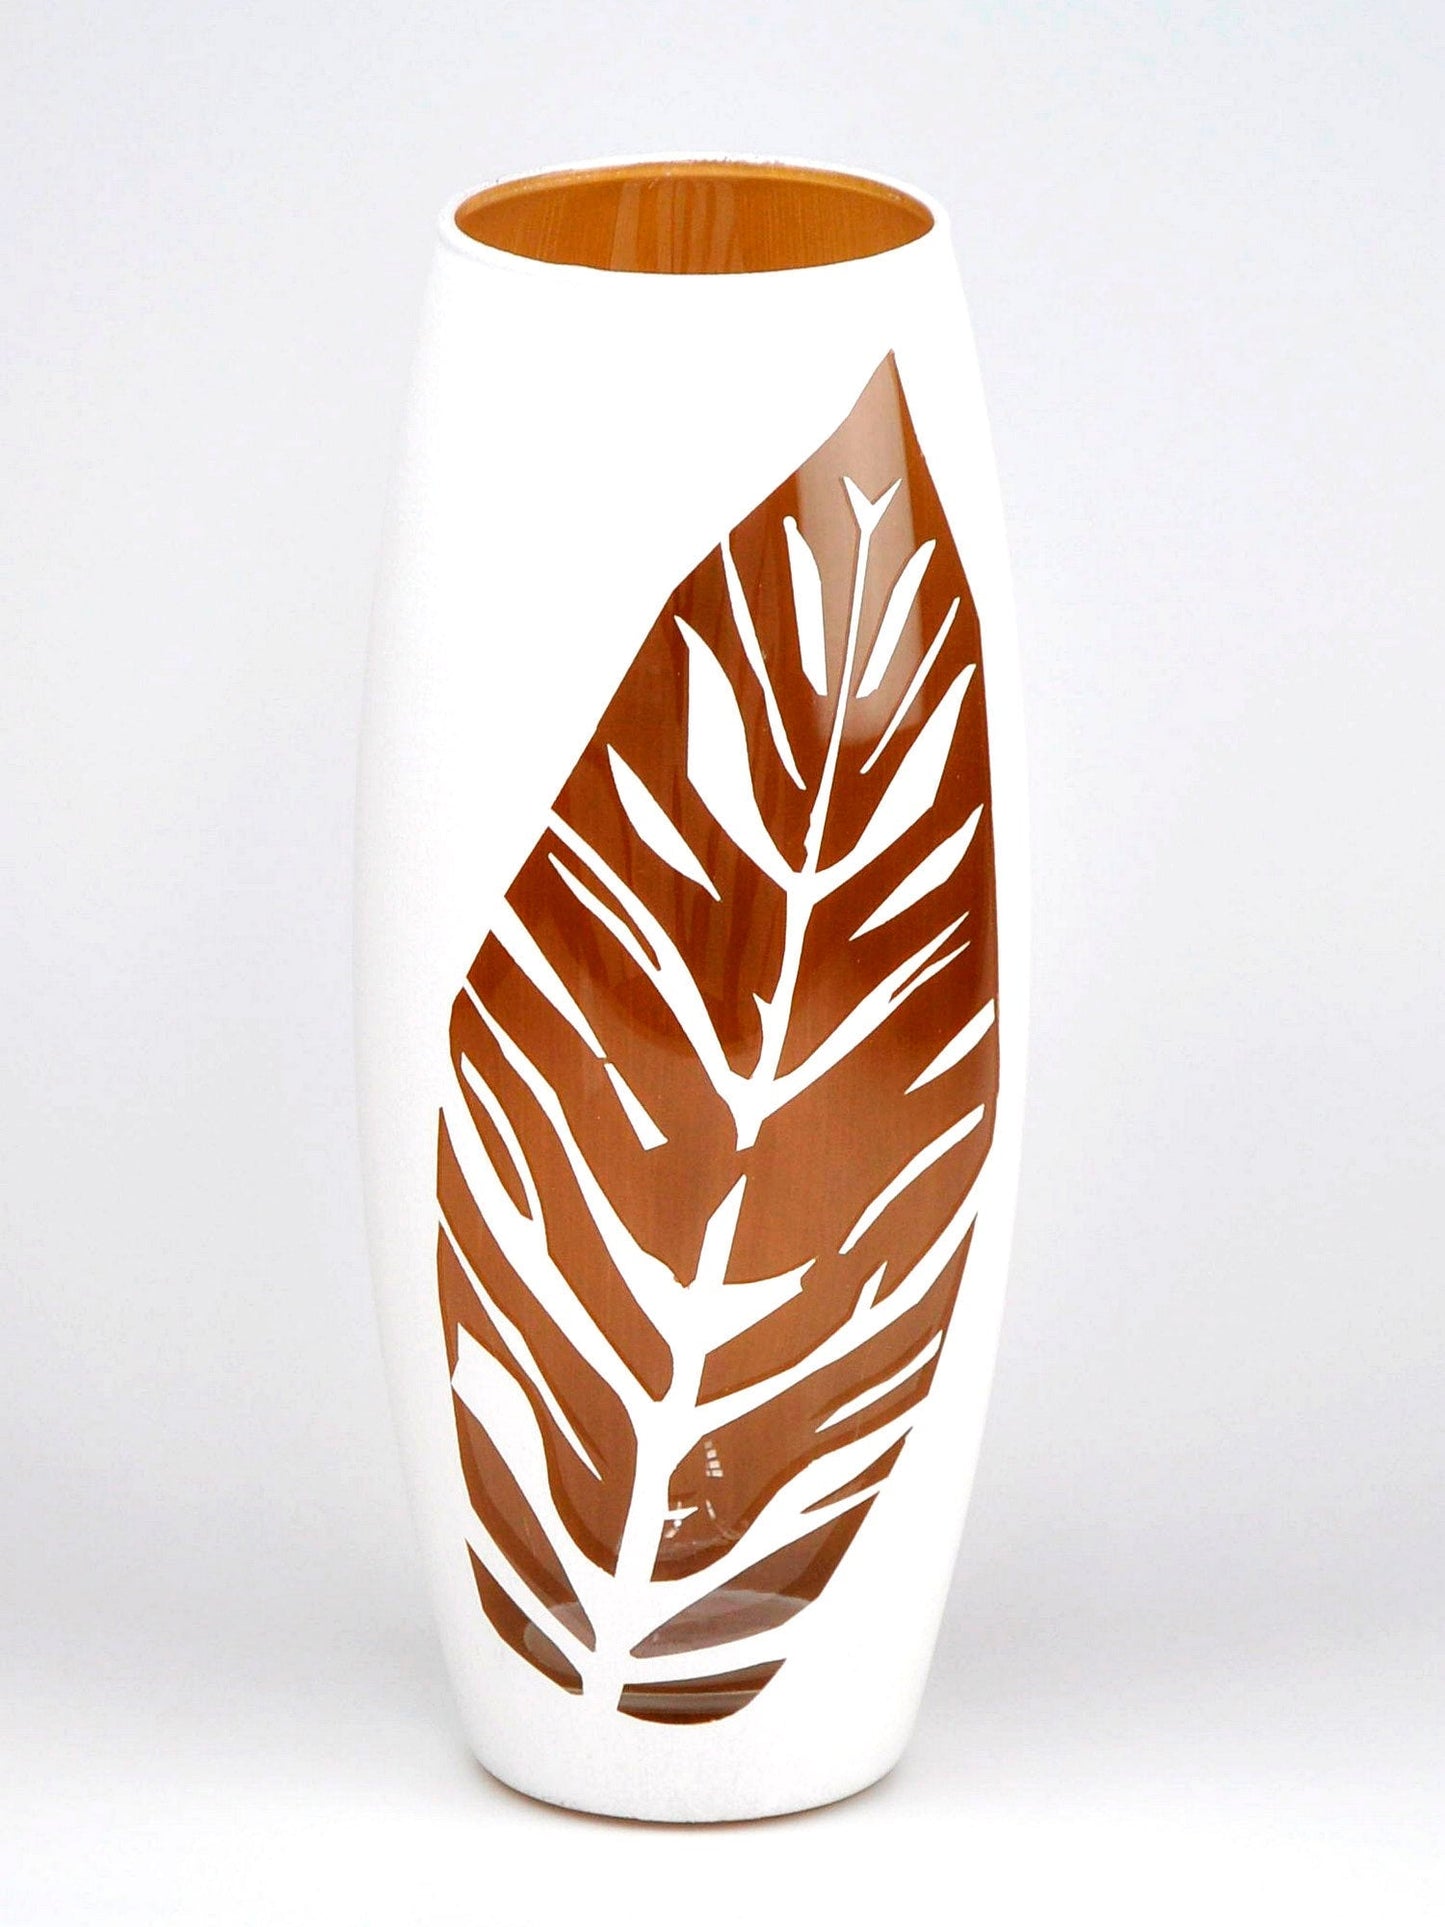 White Painted Art Glass Oval Vase for Flowers | Interior Design | Home Decor | Table vase 10 inch